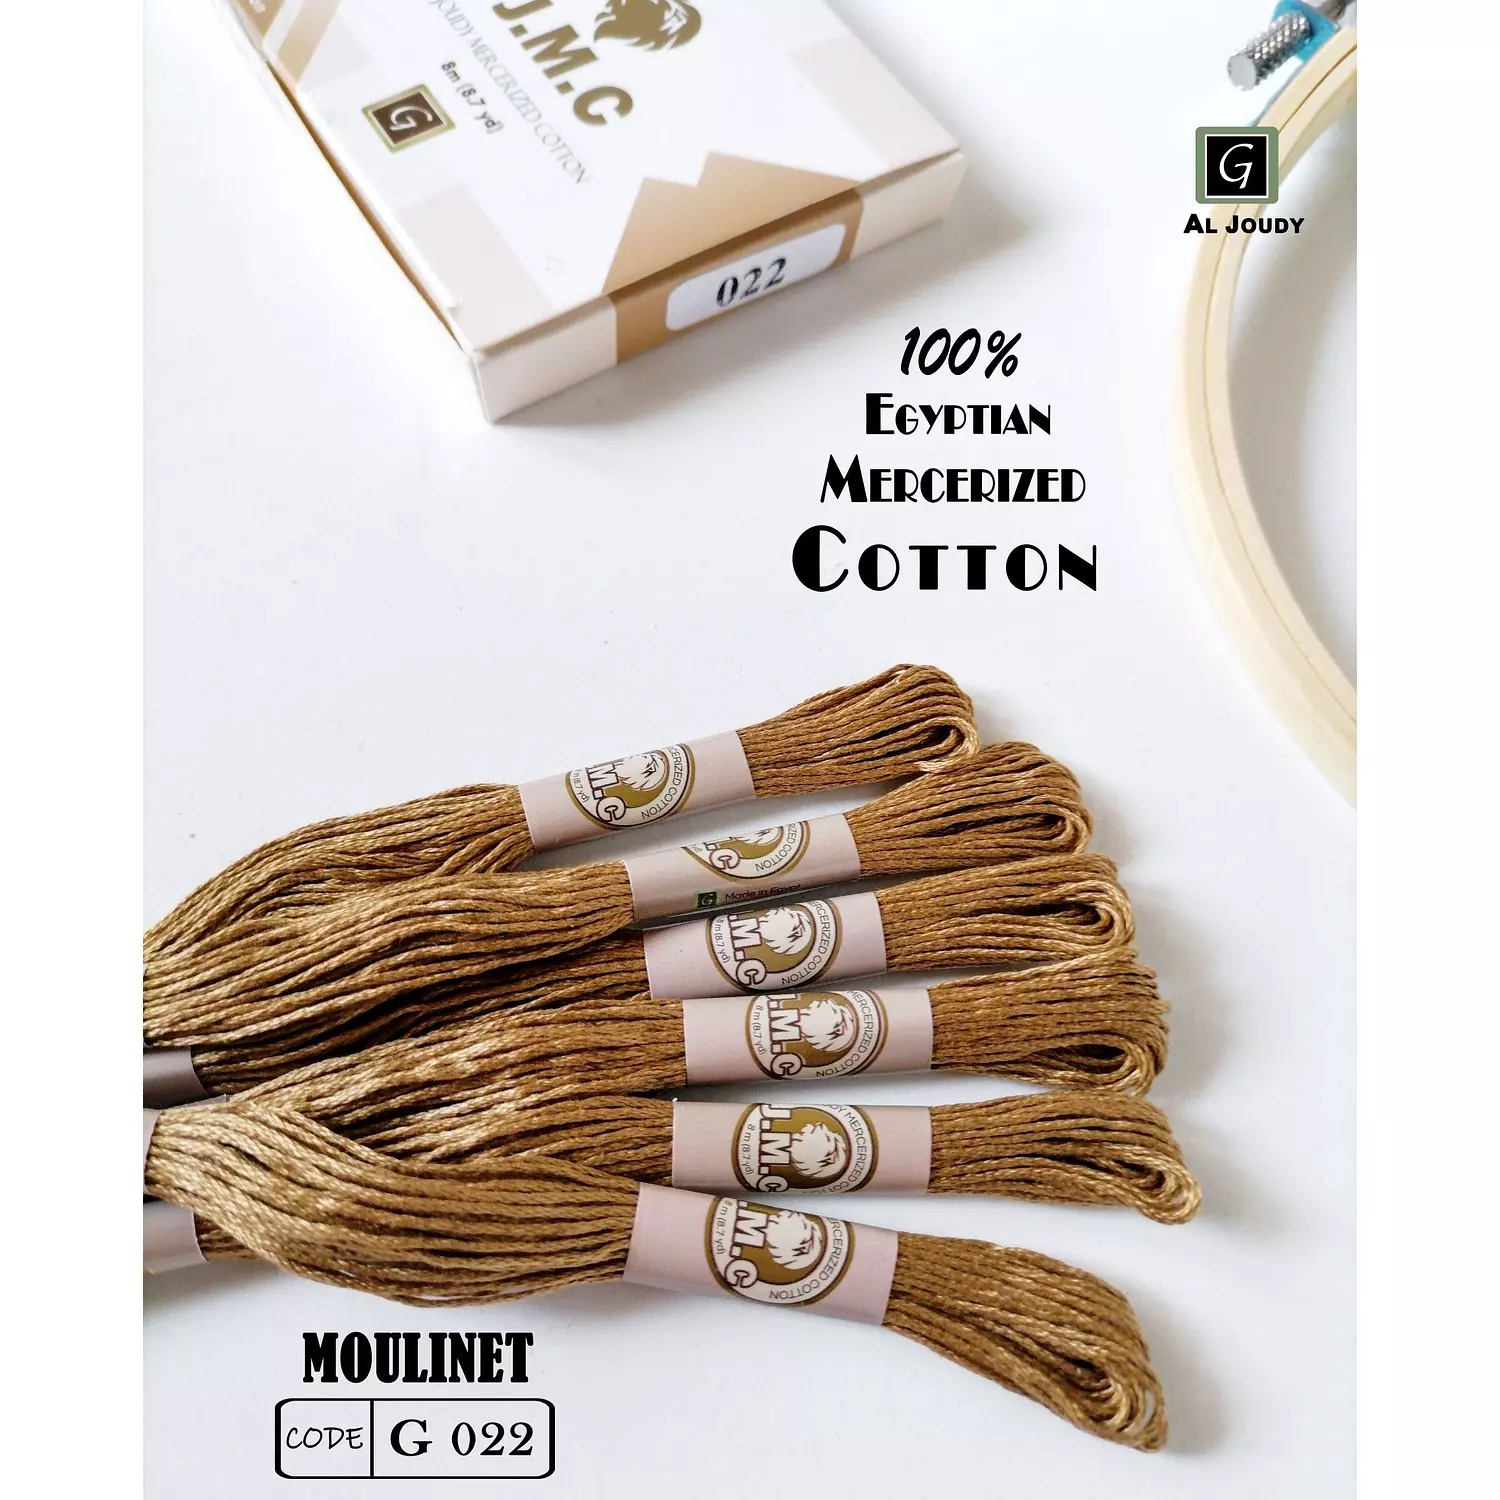 Moulinet Box ( 12 floss) 23